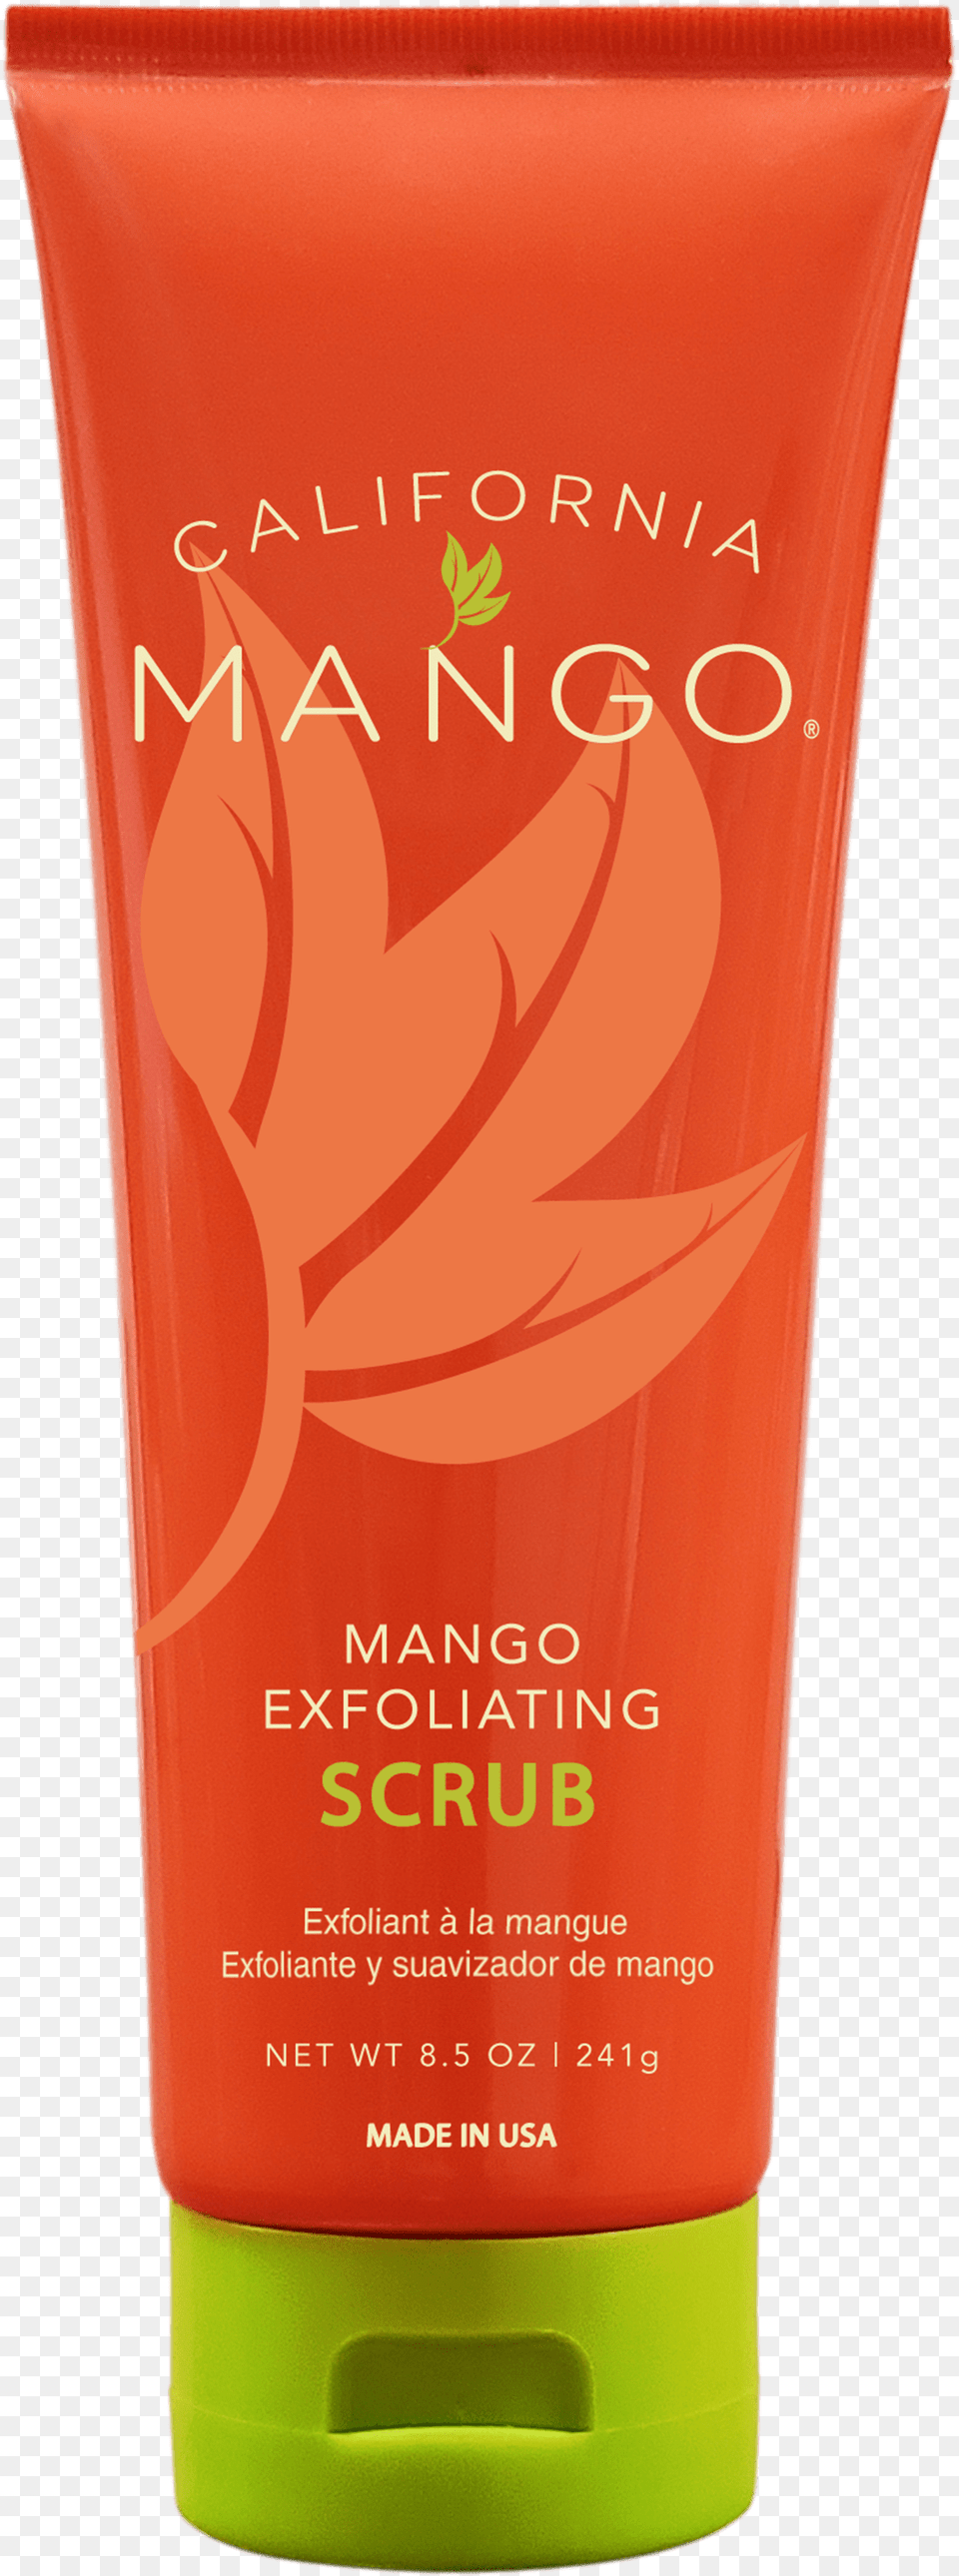 California Mango Mango Exfoliating Scrub, Bottle, Lotion, Cosmetics, Tape Free Transparent Png